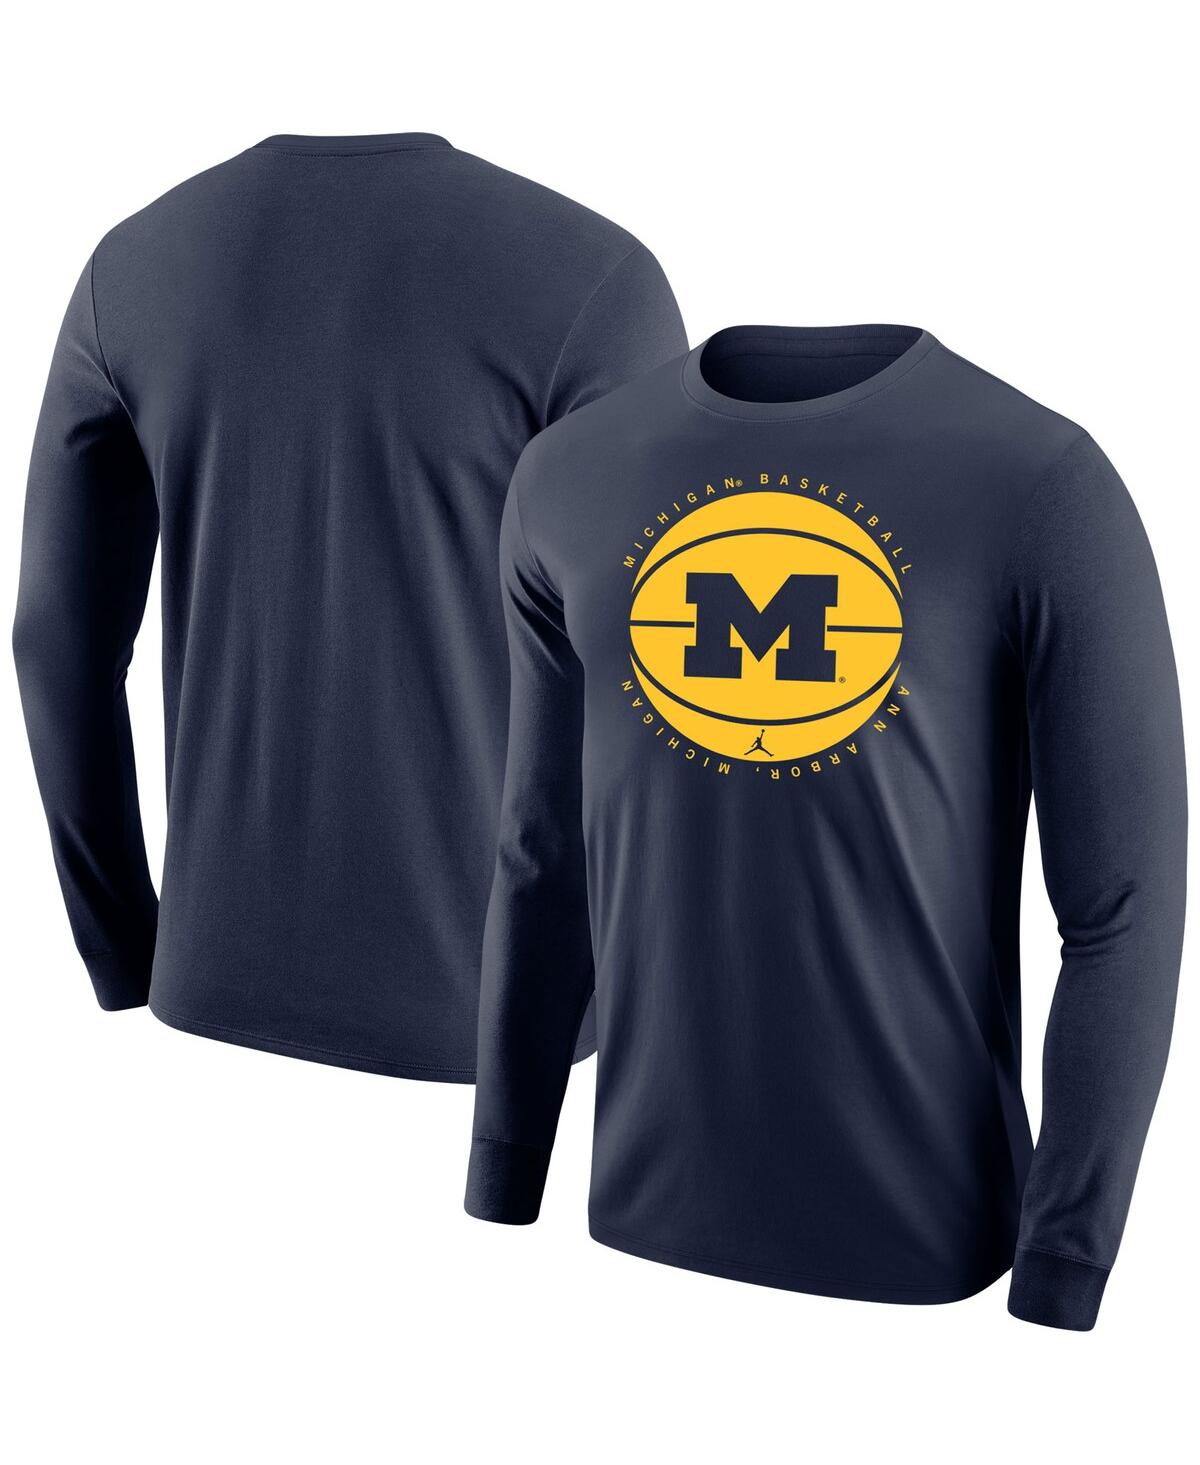 Men's Jordan Navy Michigan Wolverines Basketball Long Sleeve T-shirt - Navy